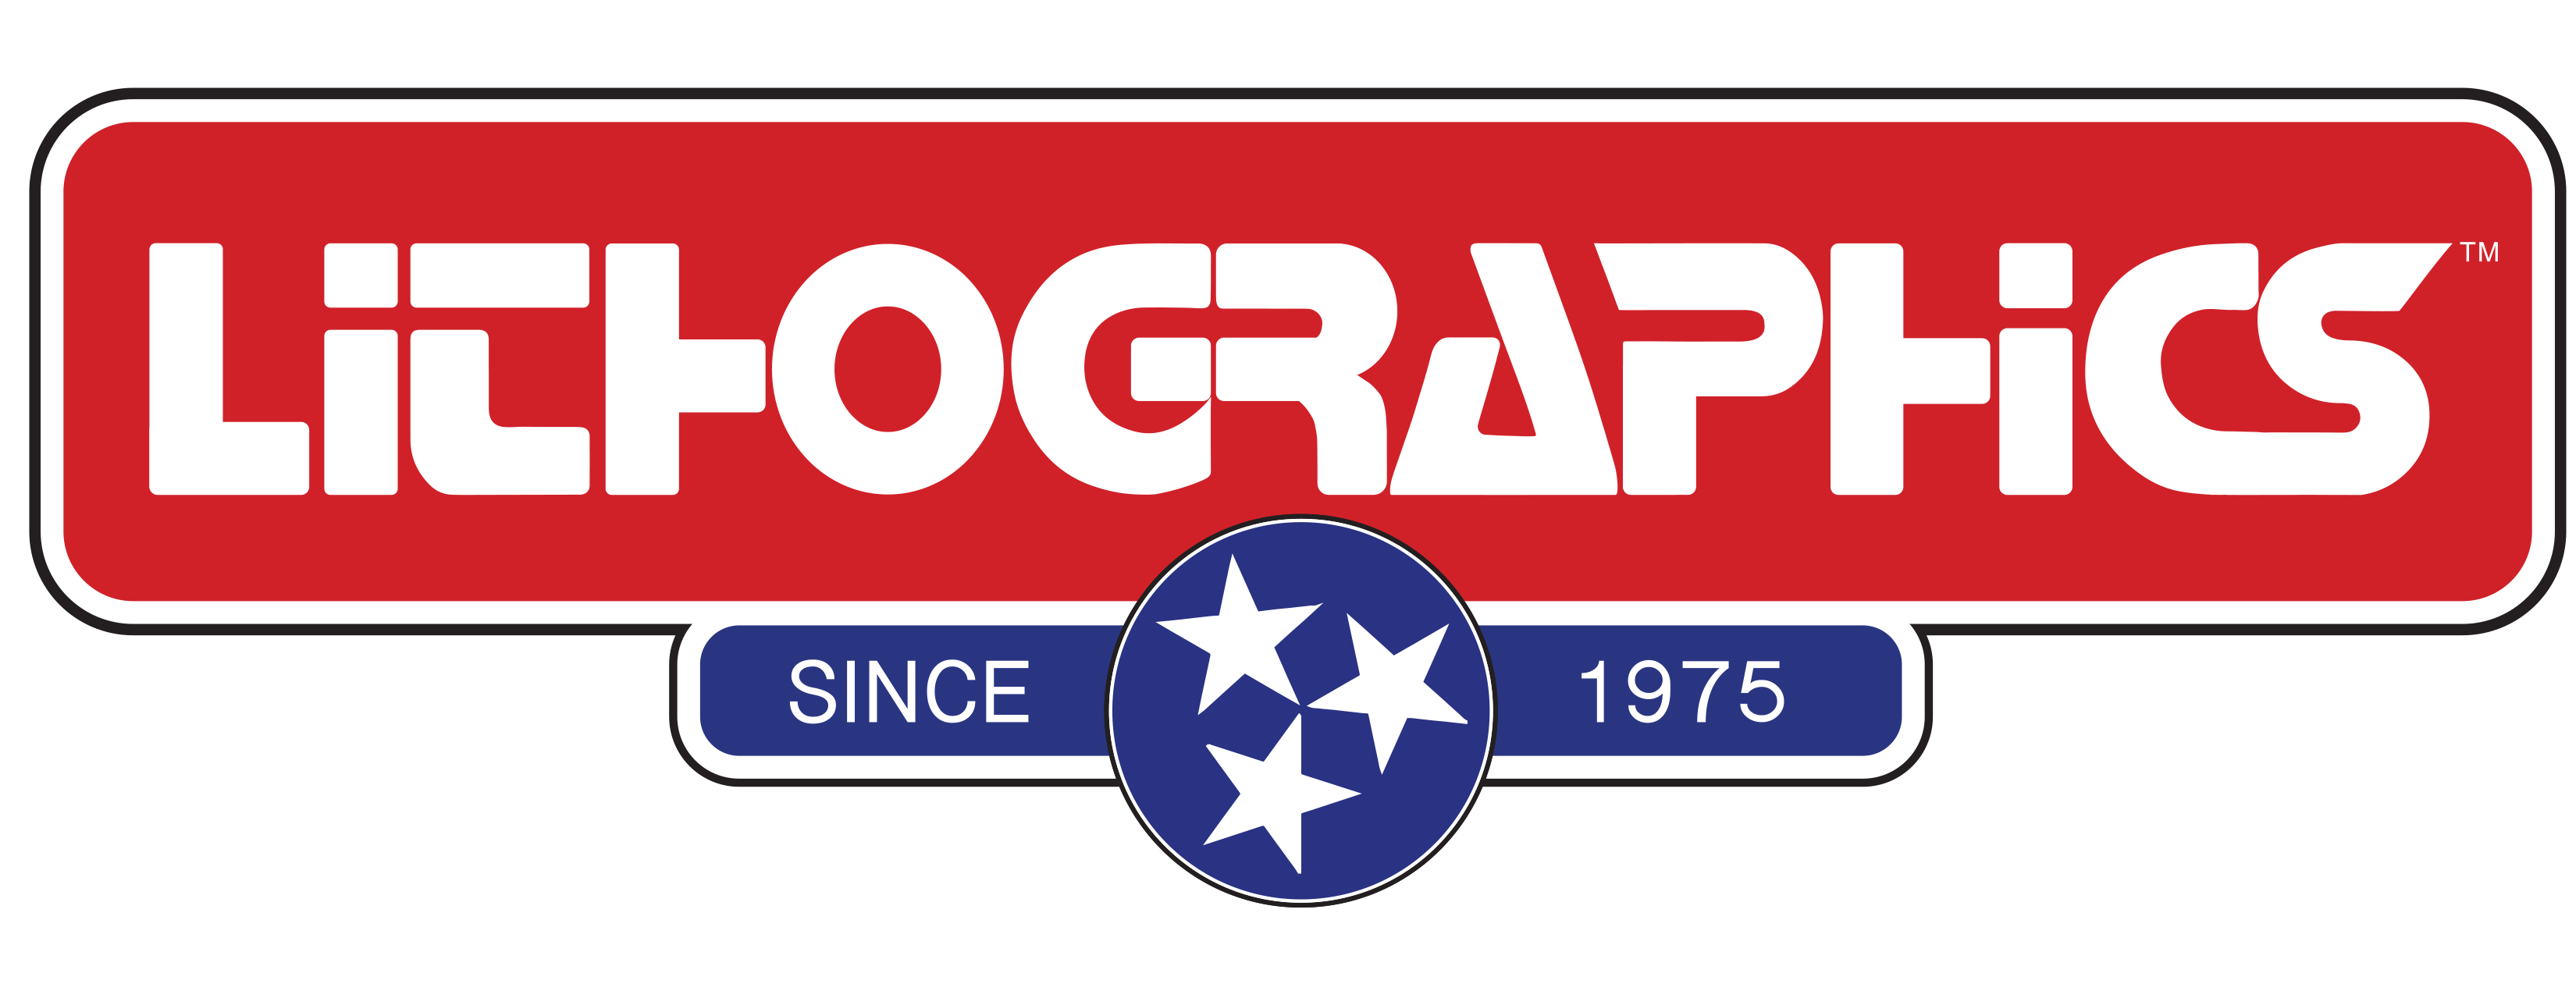 Lithographics, Inc.'s Logo